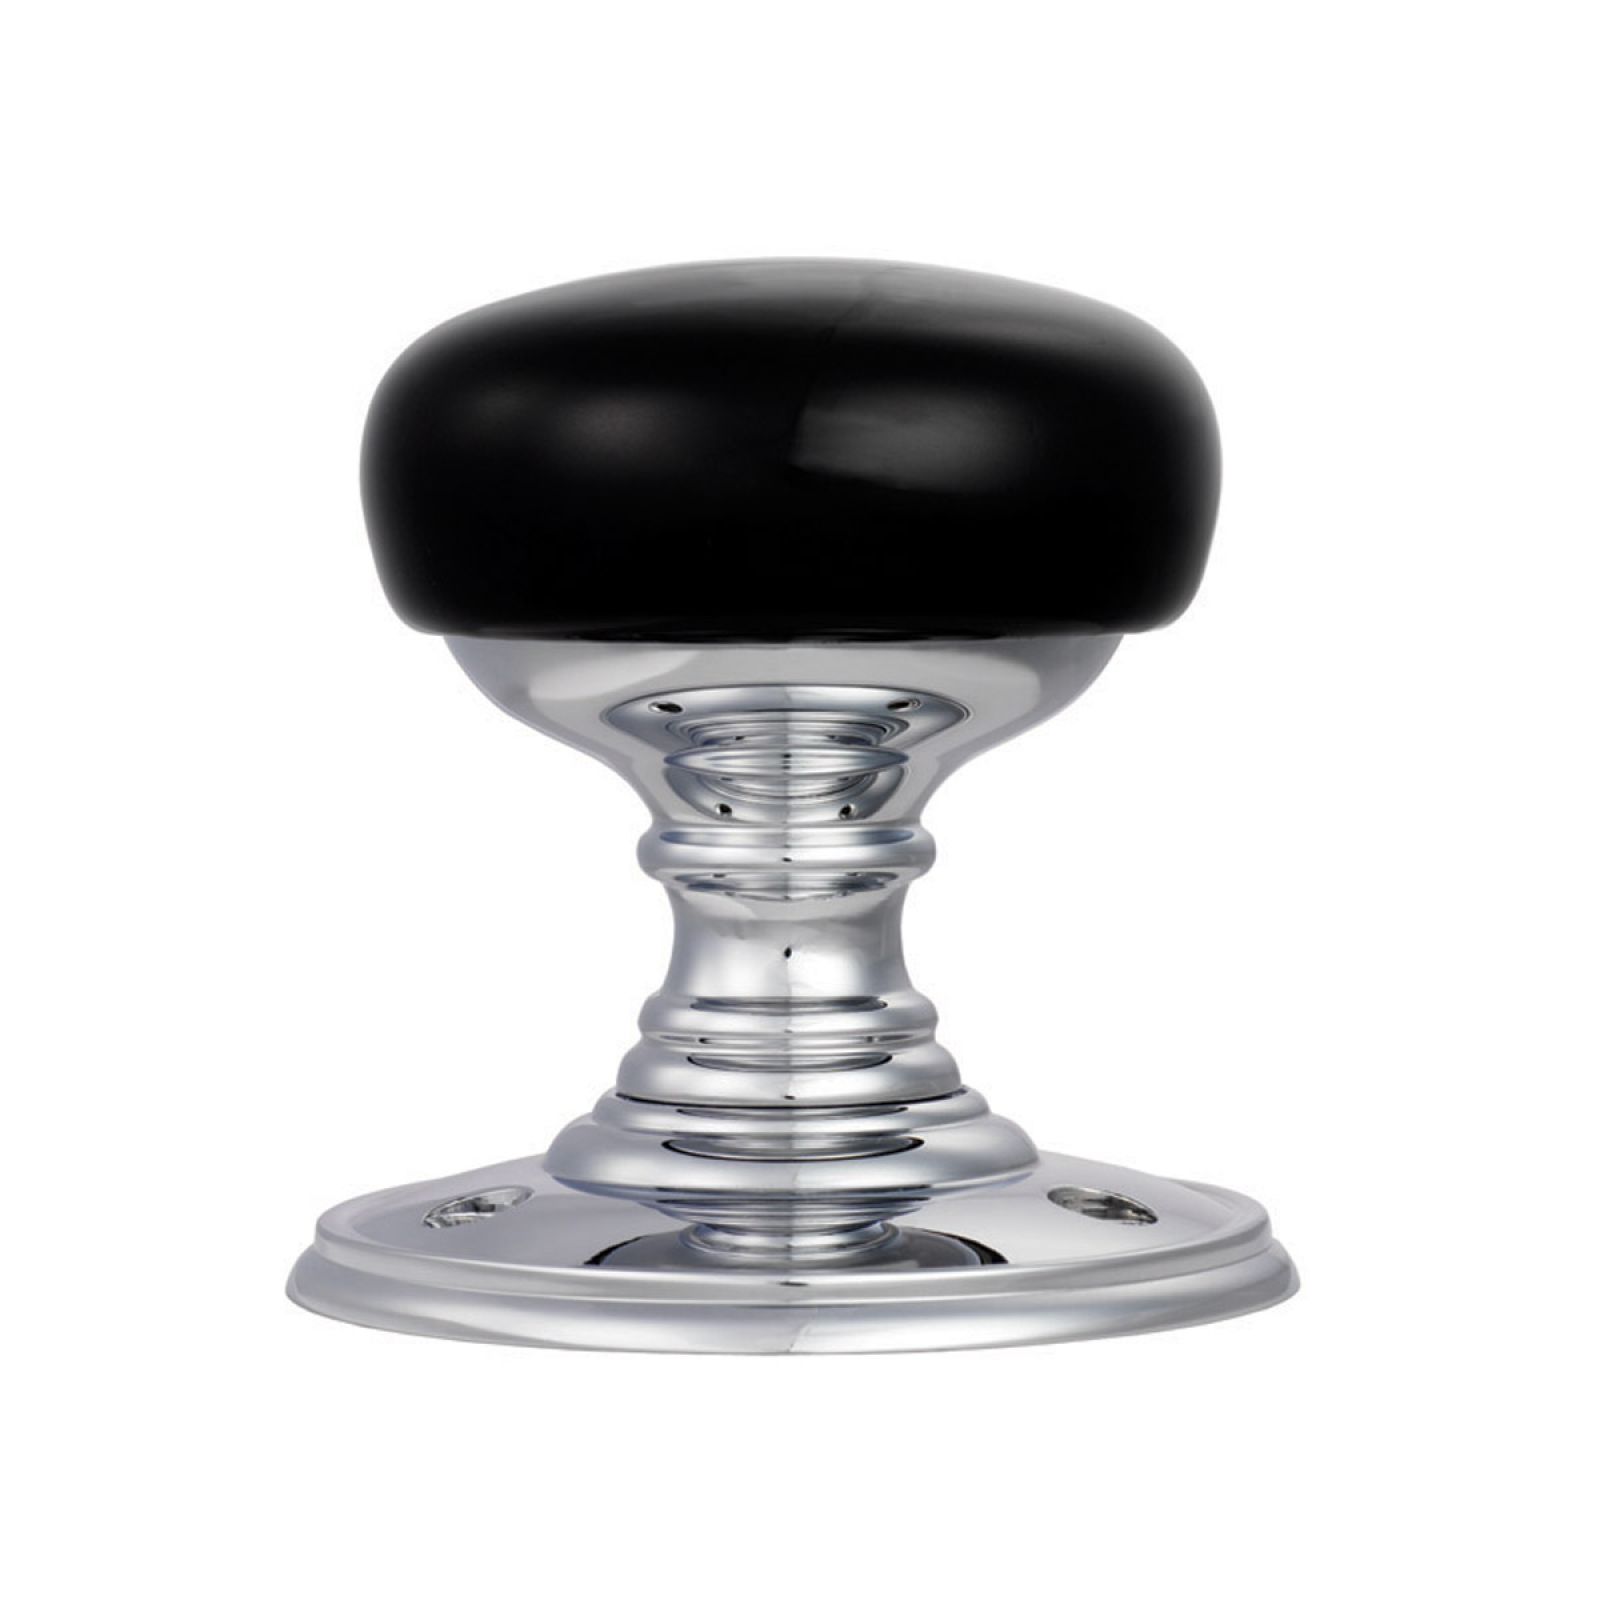 Porcelain knob (plain black) 60mm on polished chrome